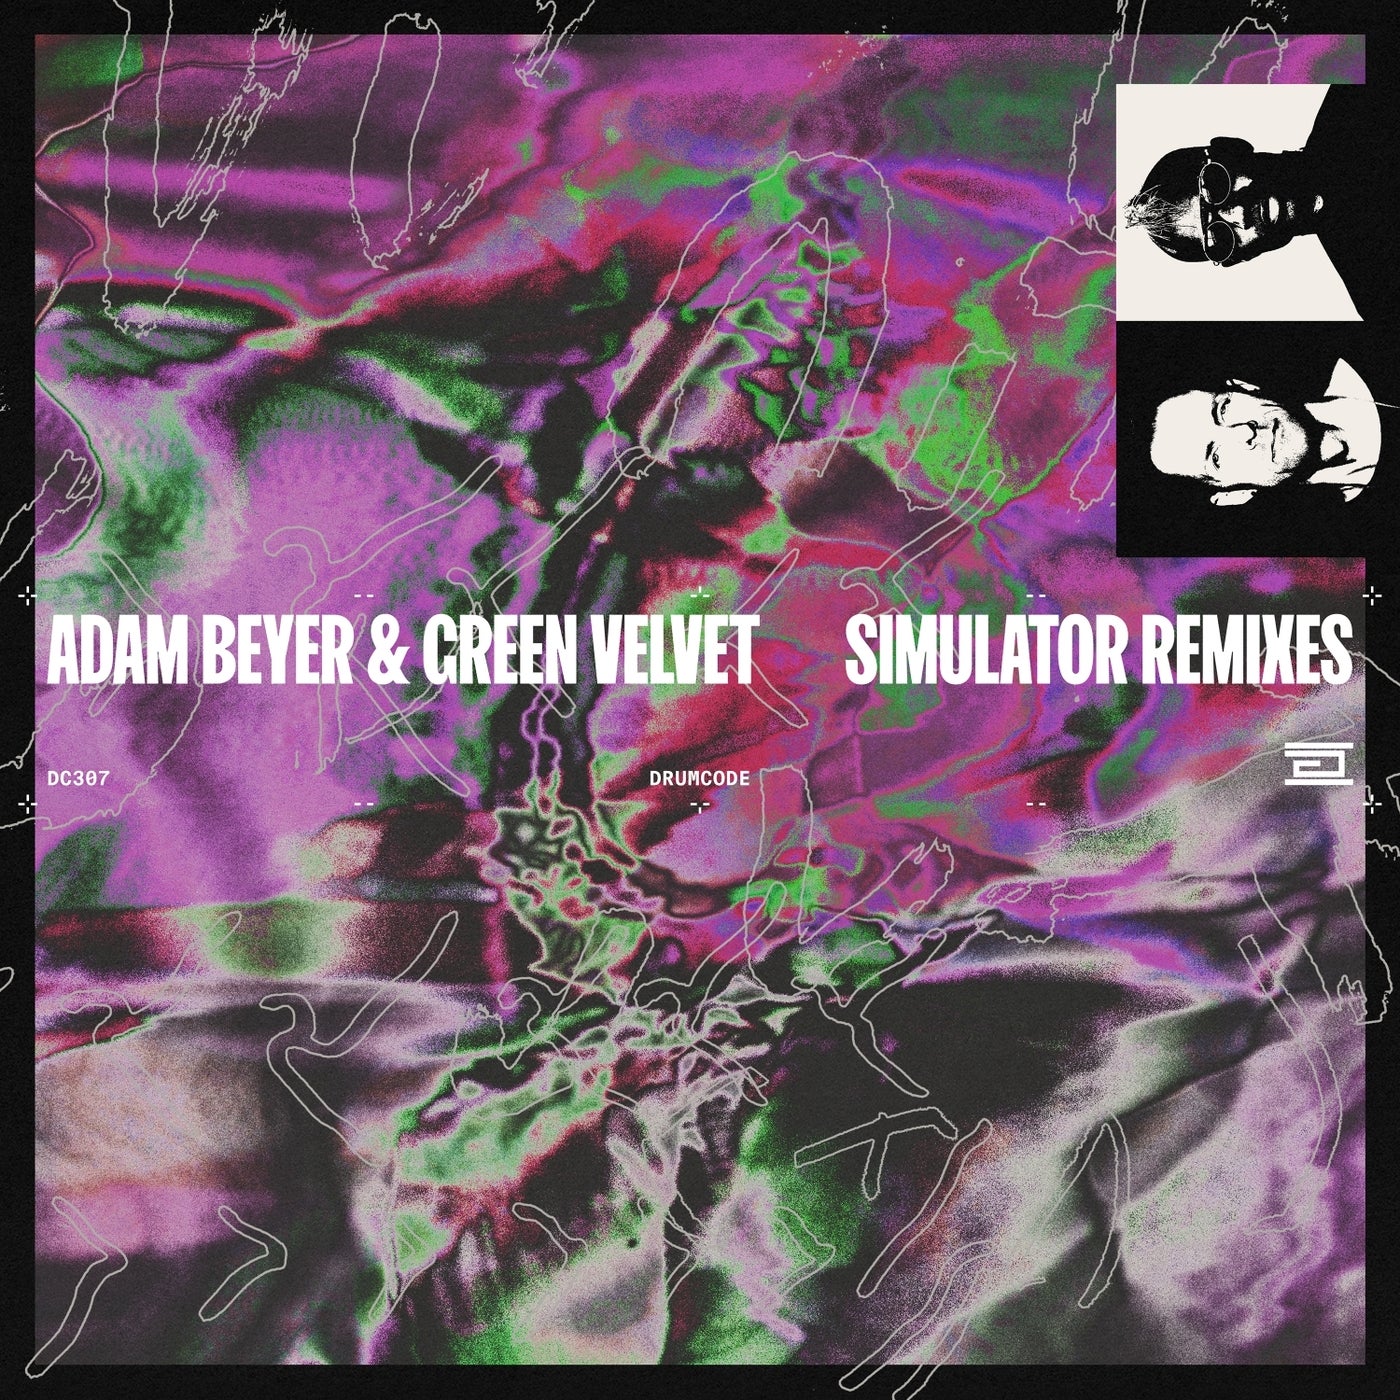 image cover: Adam Beyer, Green Velvet - Simulator Remixes on Drumcode